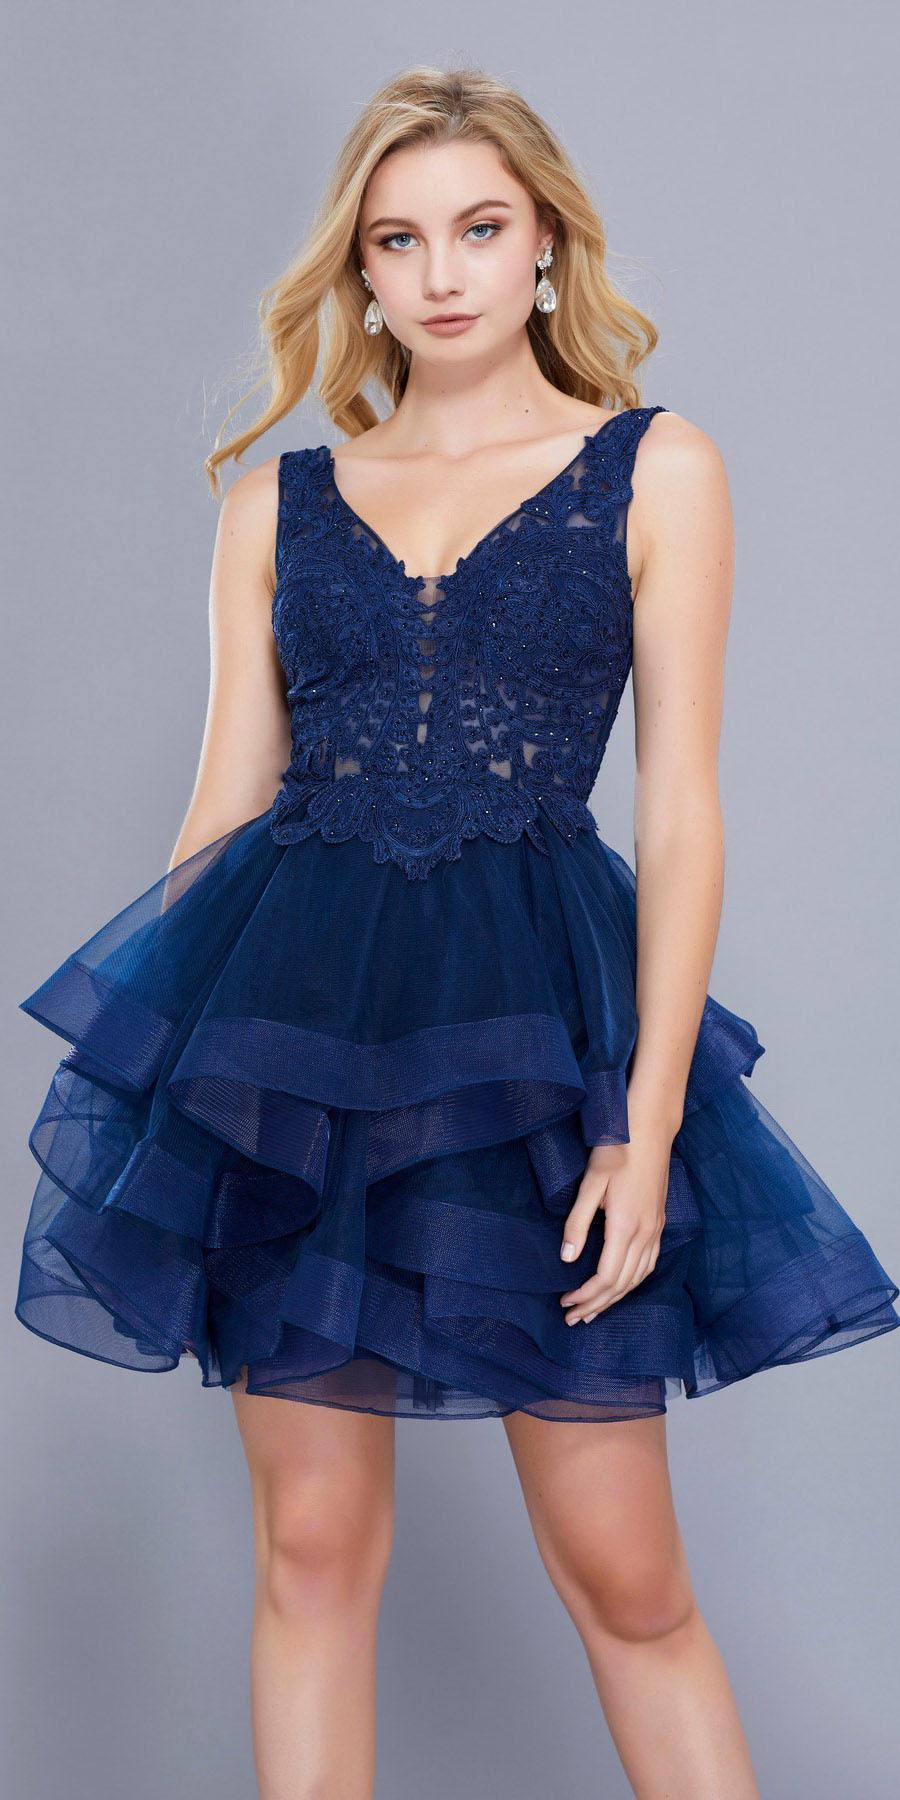 navy blue ruffle dress